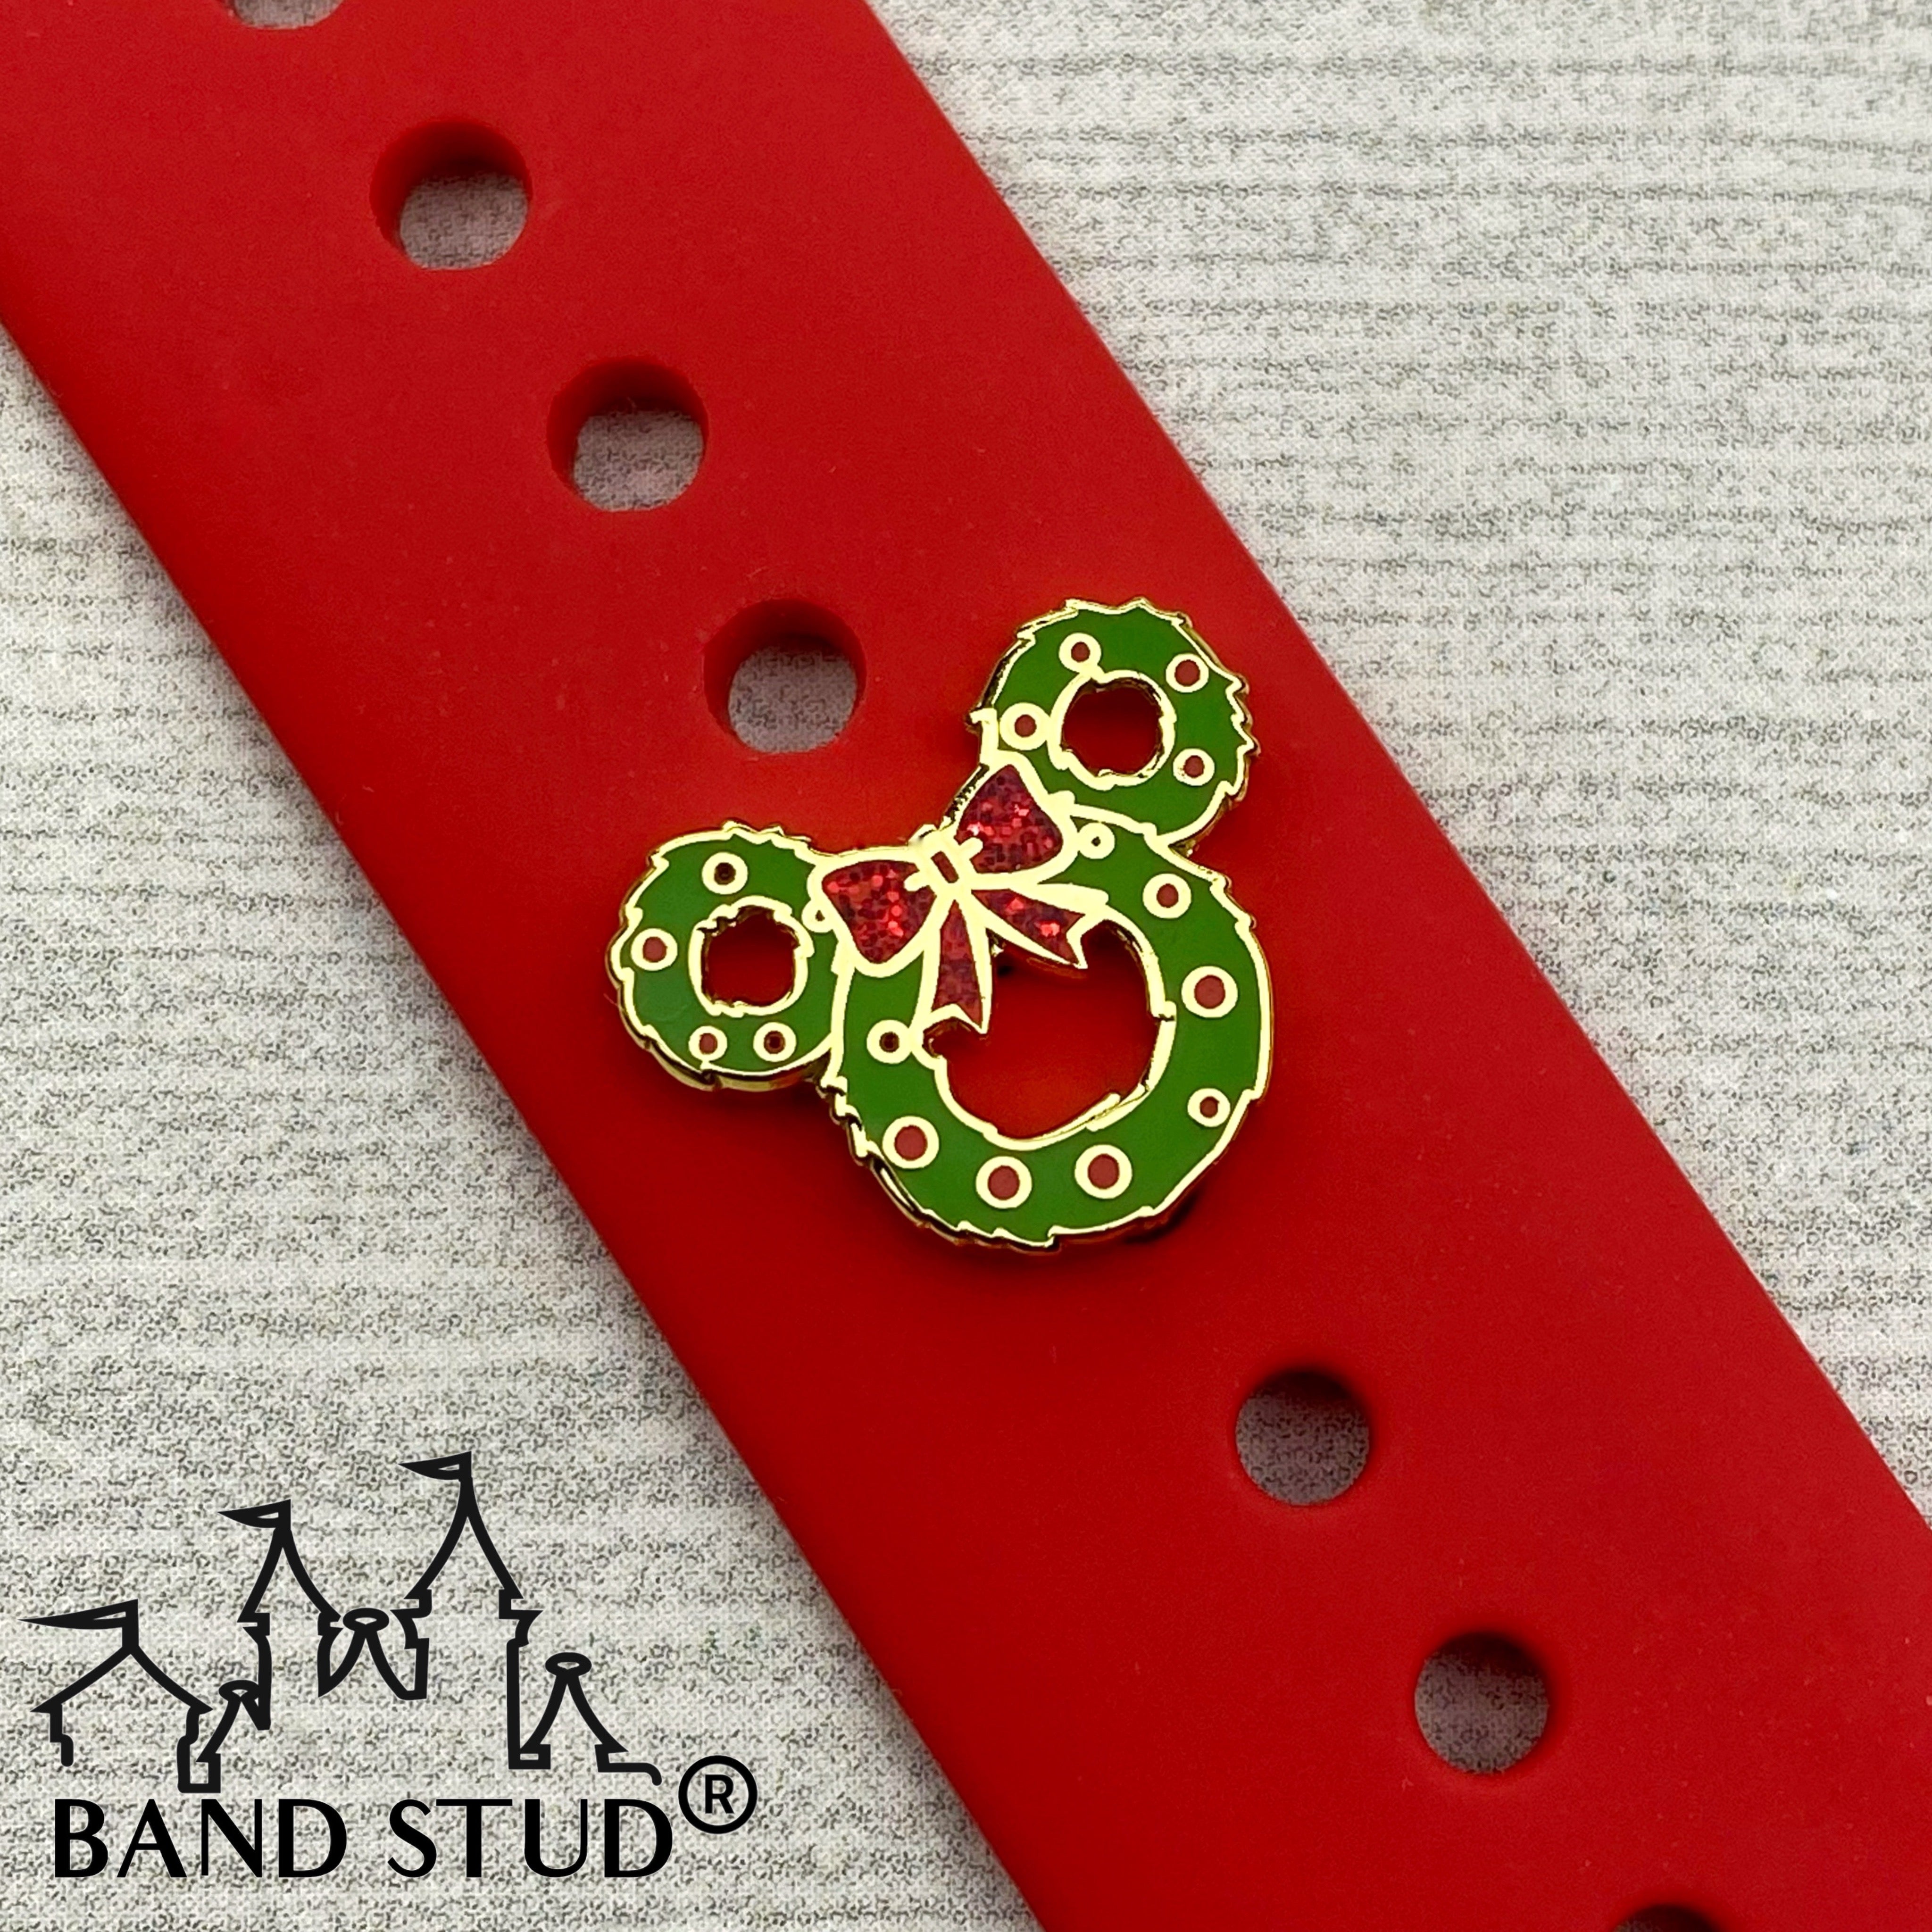 Band Stud® - Christmas Collection - Magical Wreath